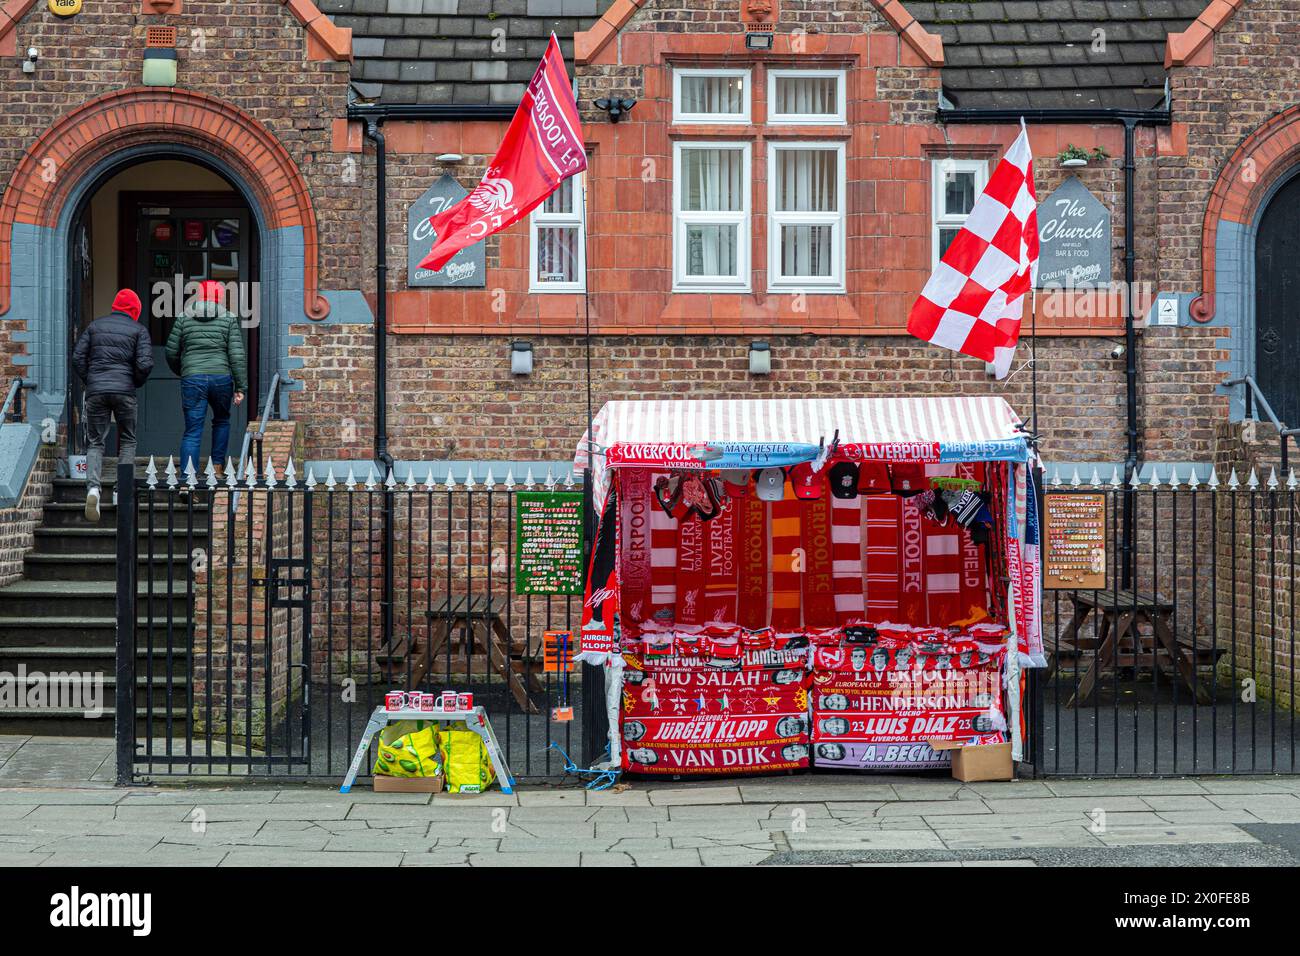 Les supporters de Liverpool stall, à l'extérieur du stade Anfield. Anfield, Liverpool, Merseyside, Lancashire, Angleterre, Royaume-Uni Banque D'Images